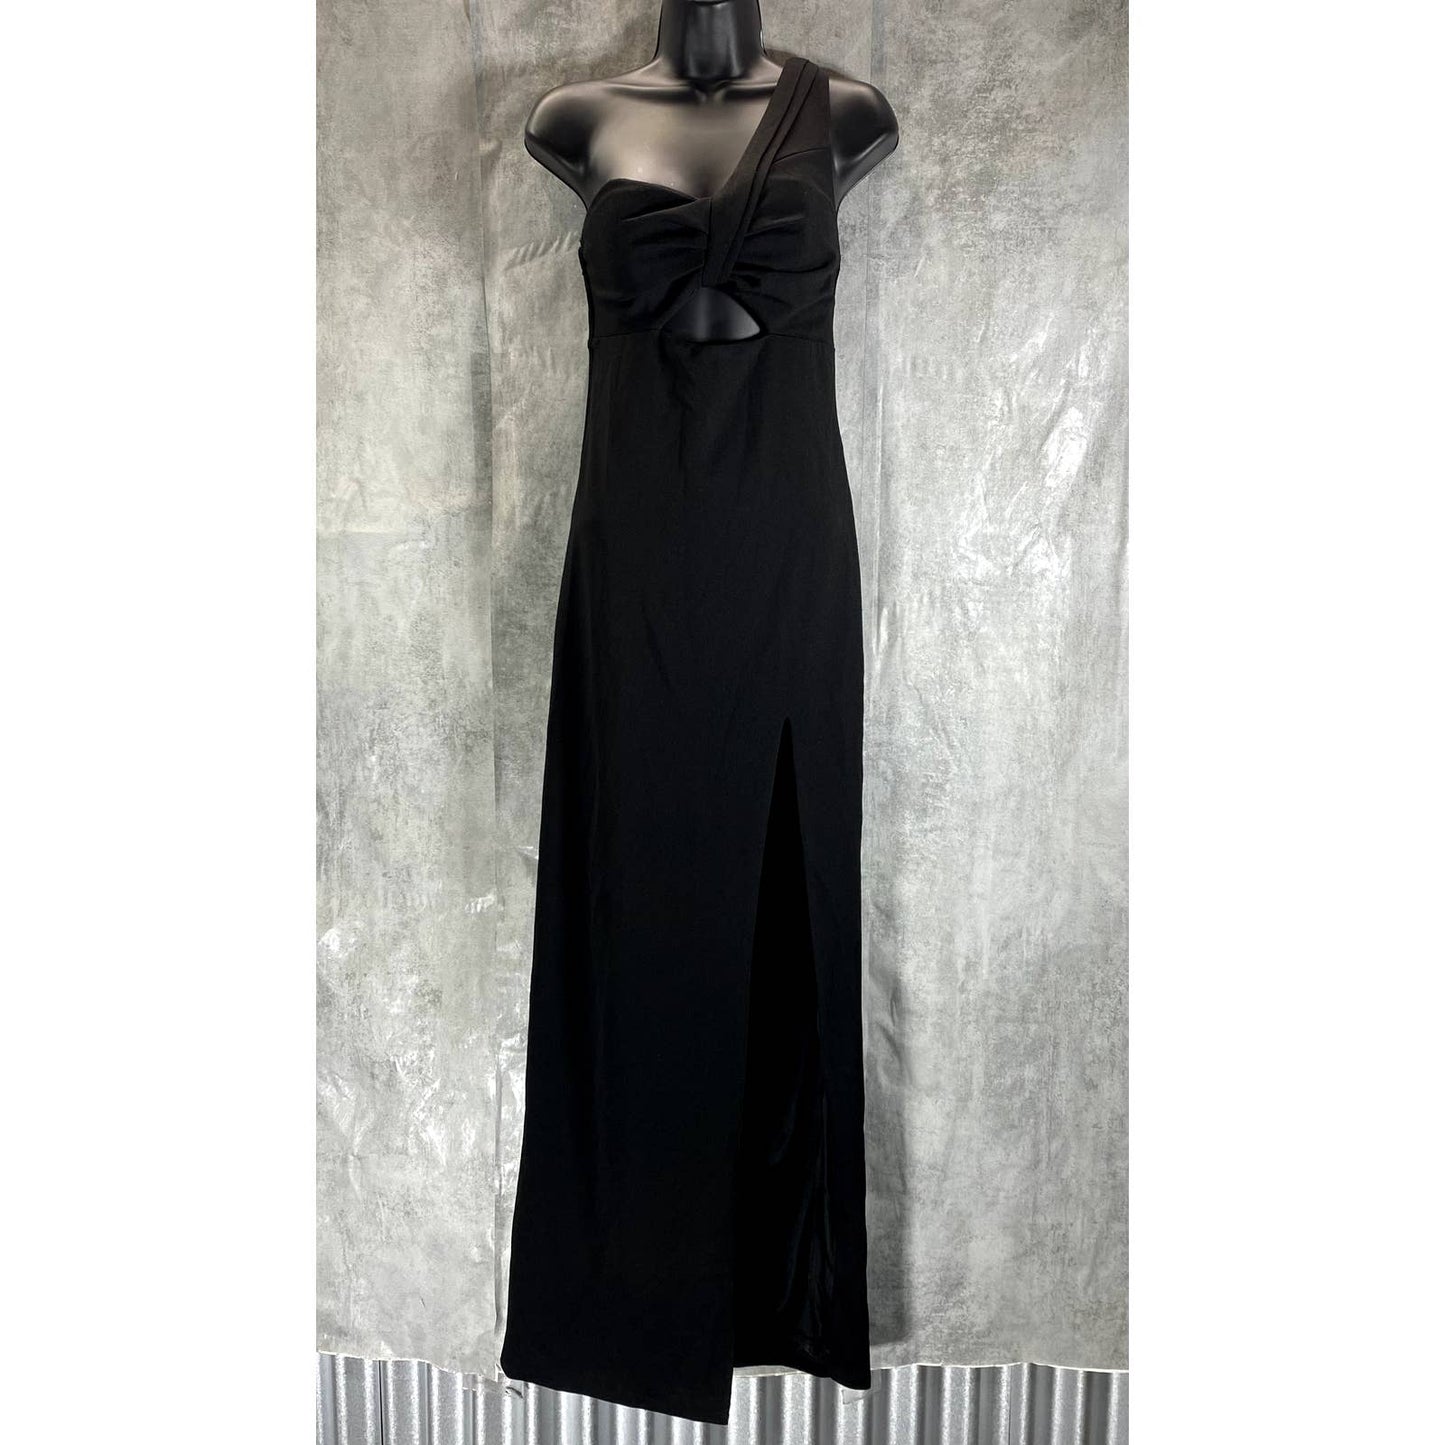 CITY STUDIO Juniors' Black One-Shoulder Cutout Side-Slit Maxi Dress SZ 9